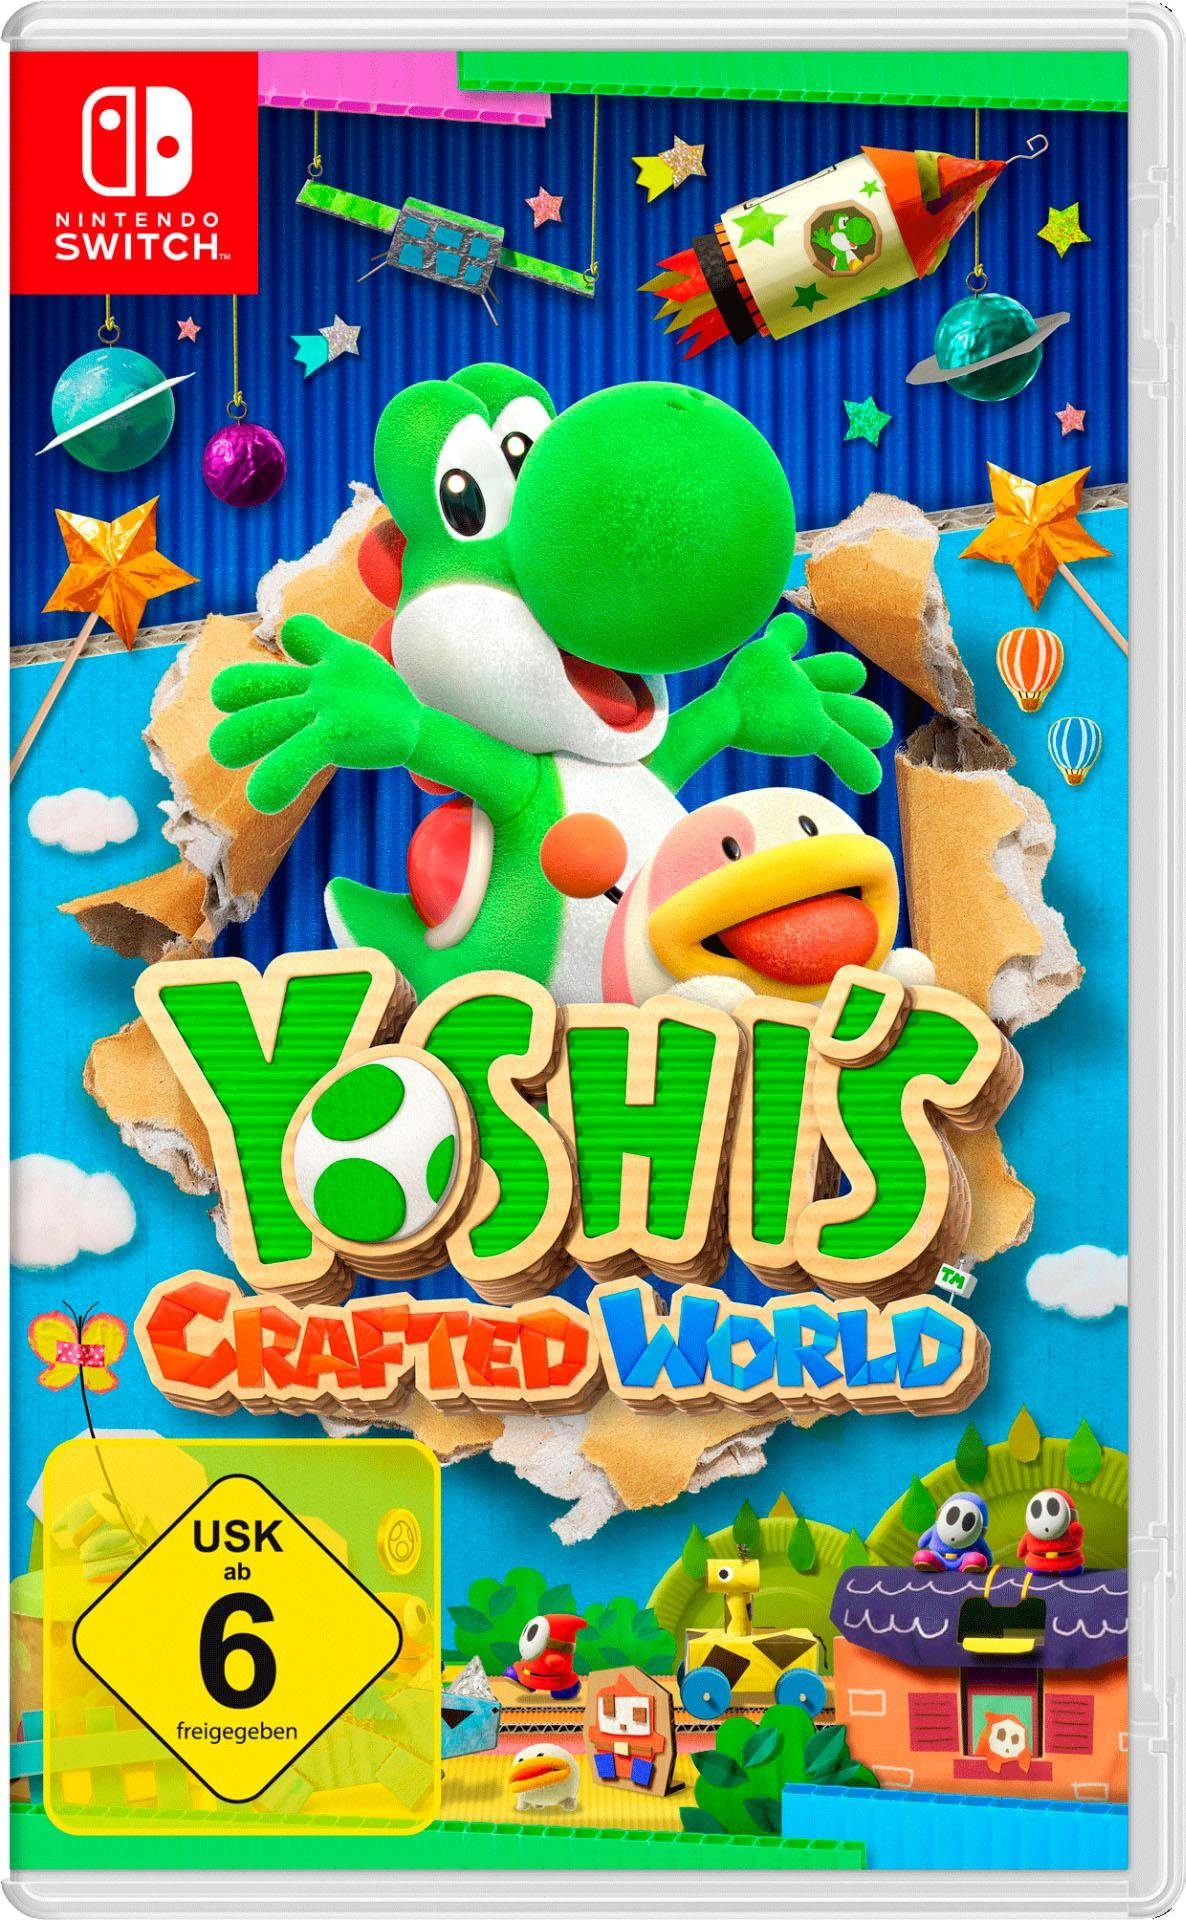 Crafted World Nintendo Switch Yoshi’s